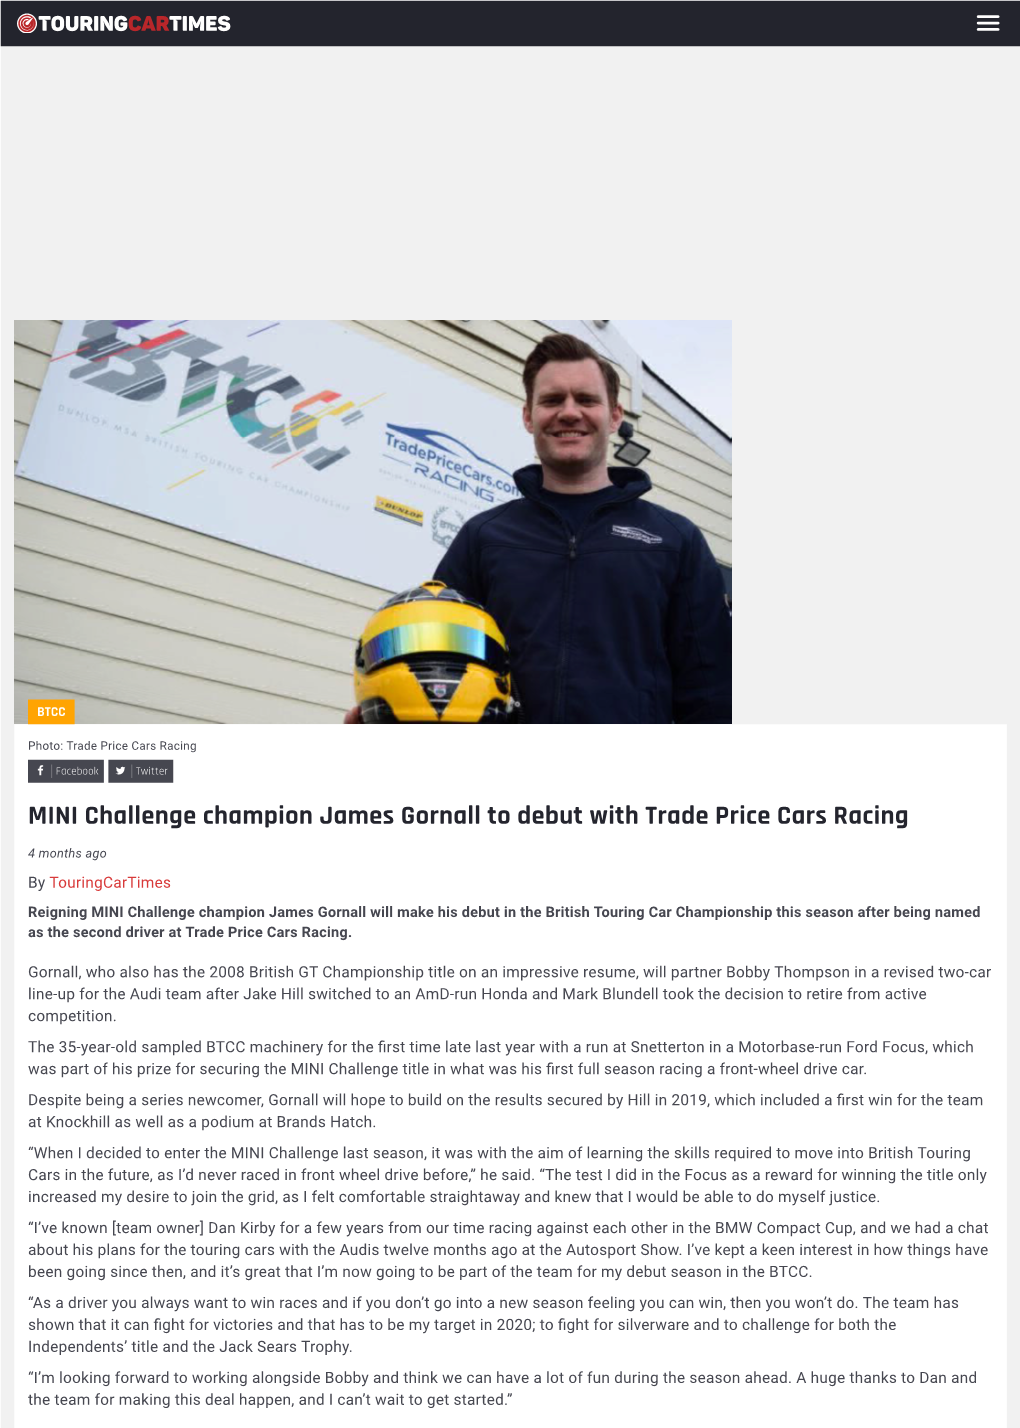 MINI Challenge Champion James Gornall to Debut with Trade Price Cars Racing